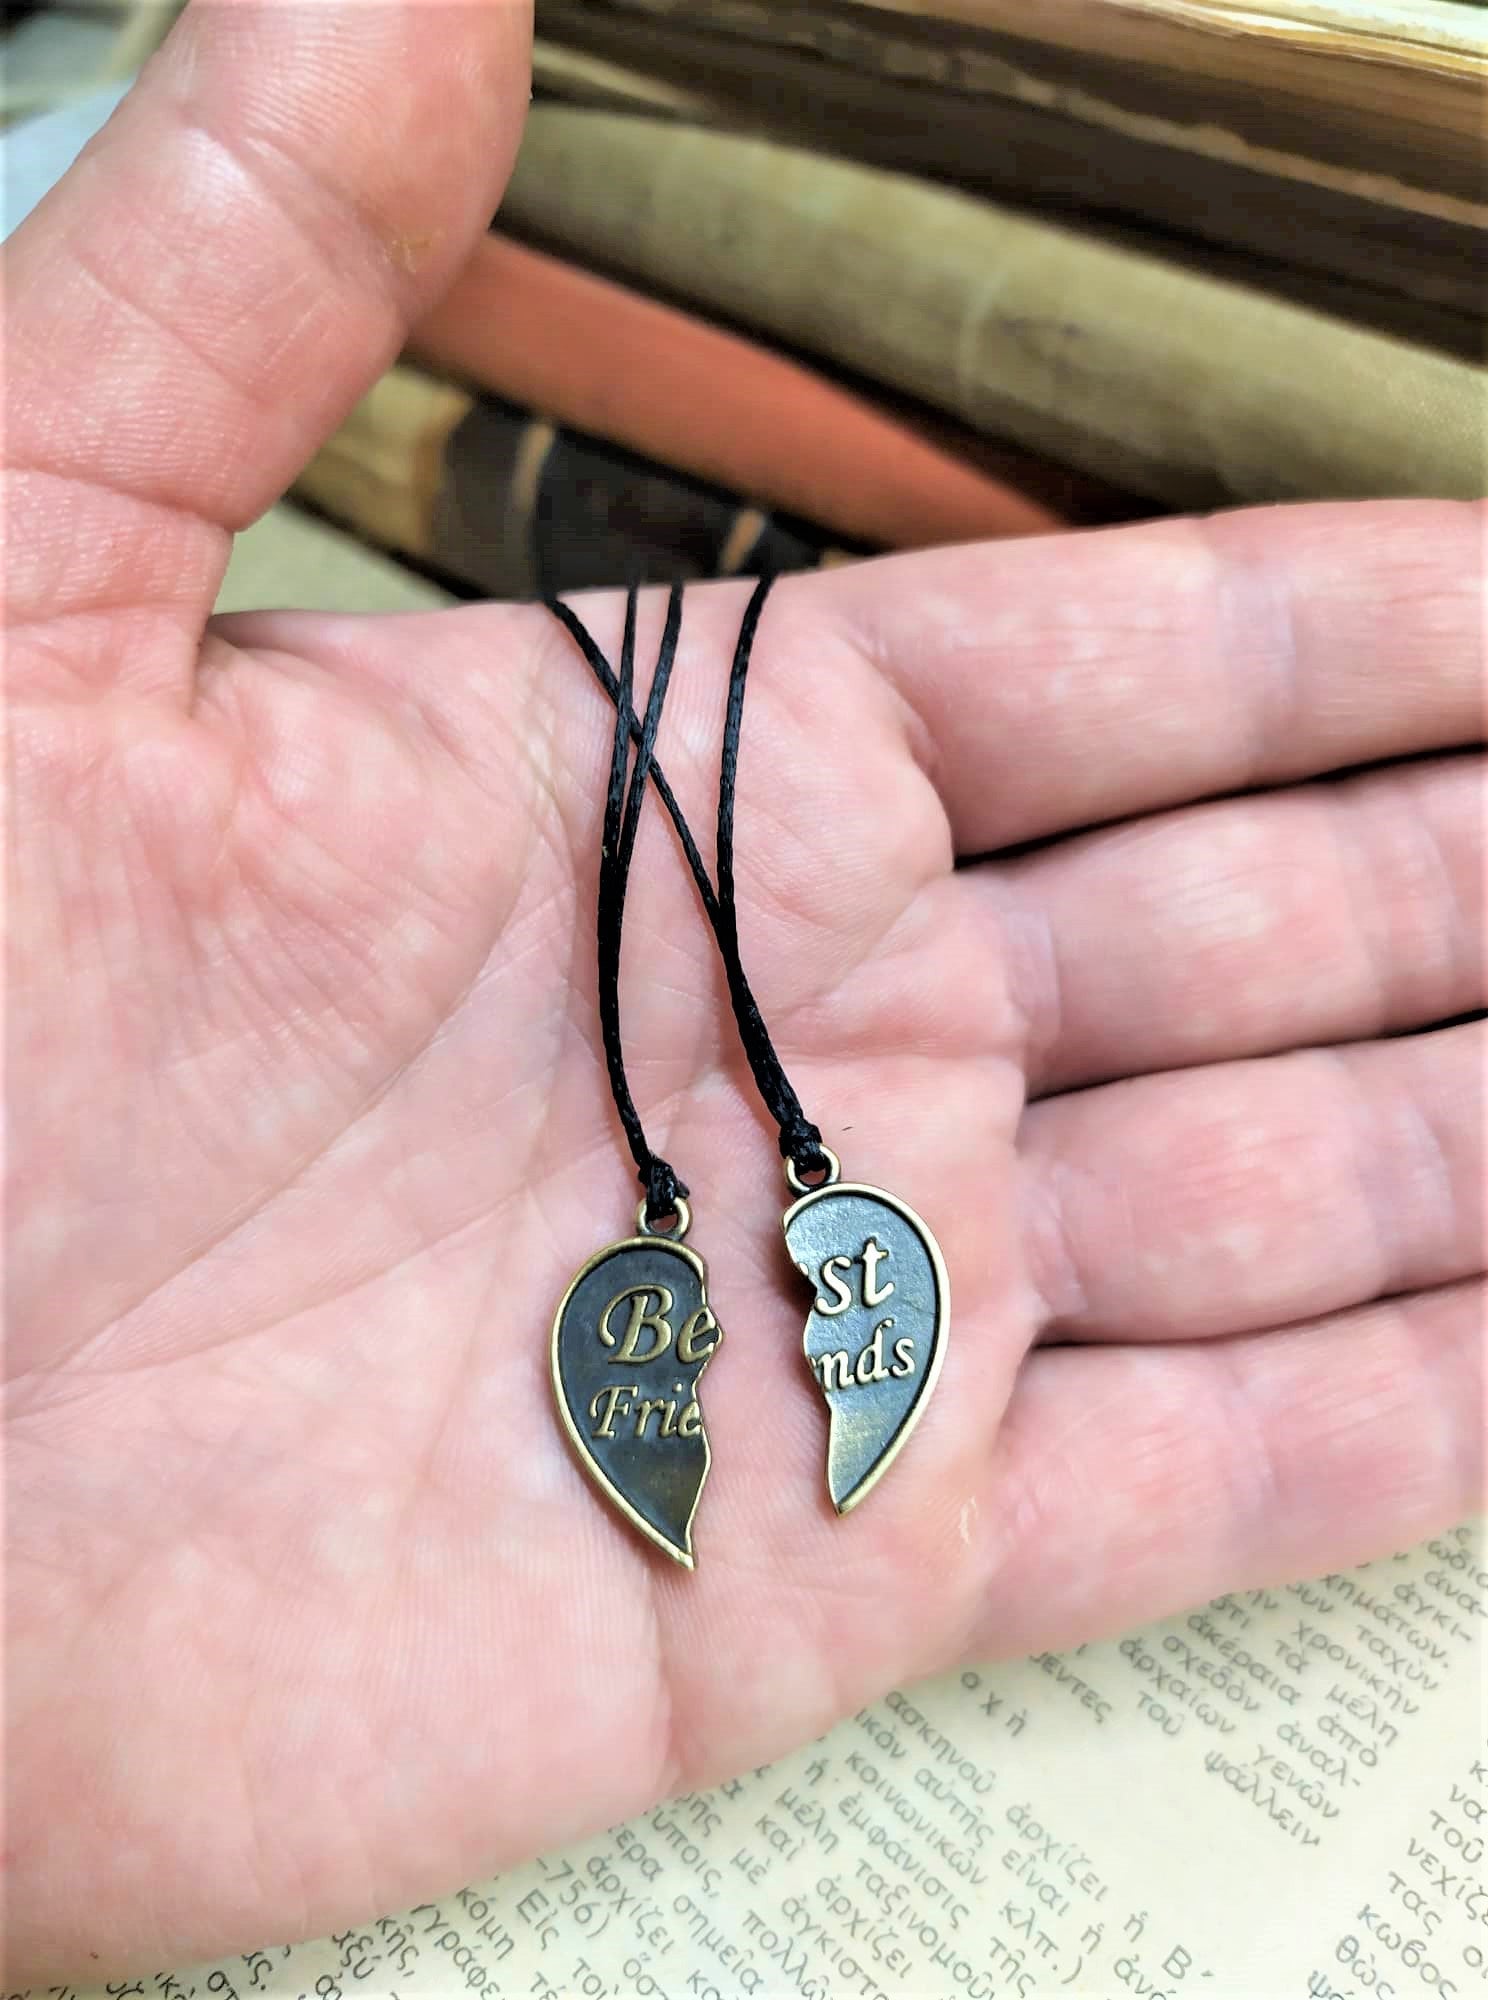 Best Friends Necklace Set for 2 Dainty Split Heart Pendant 